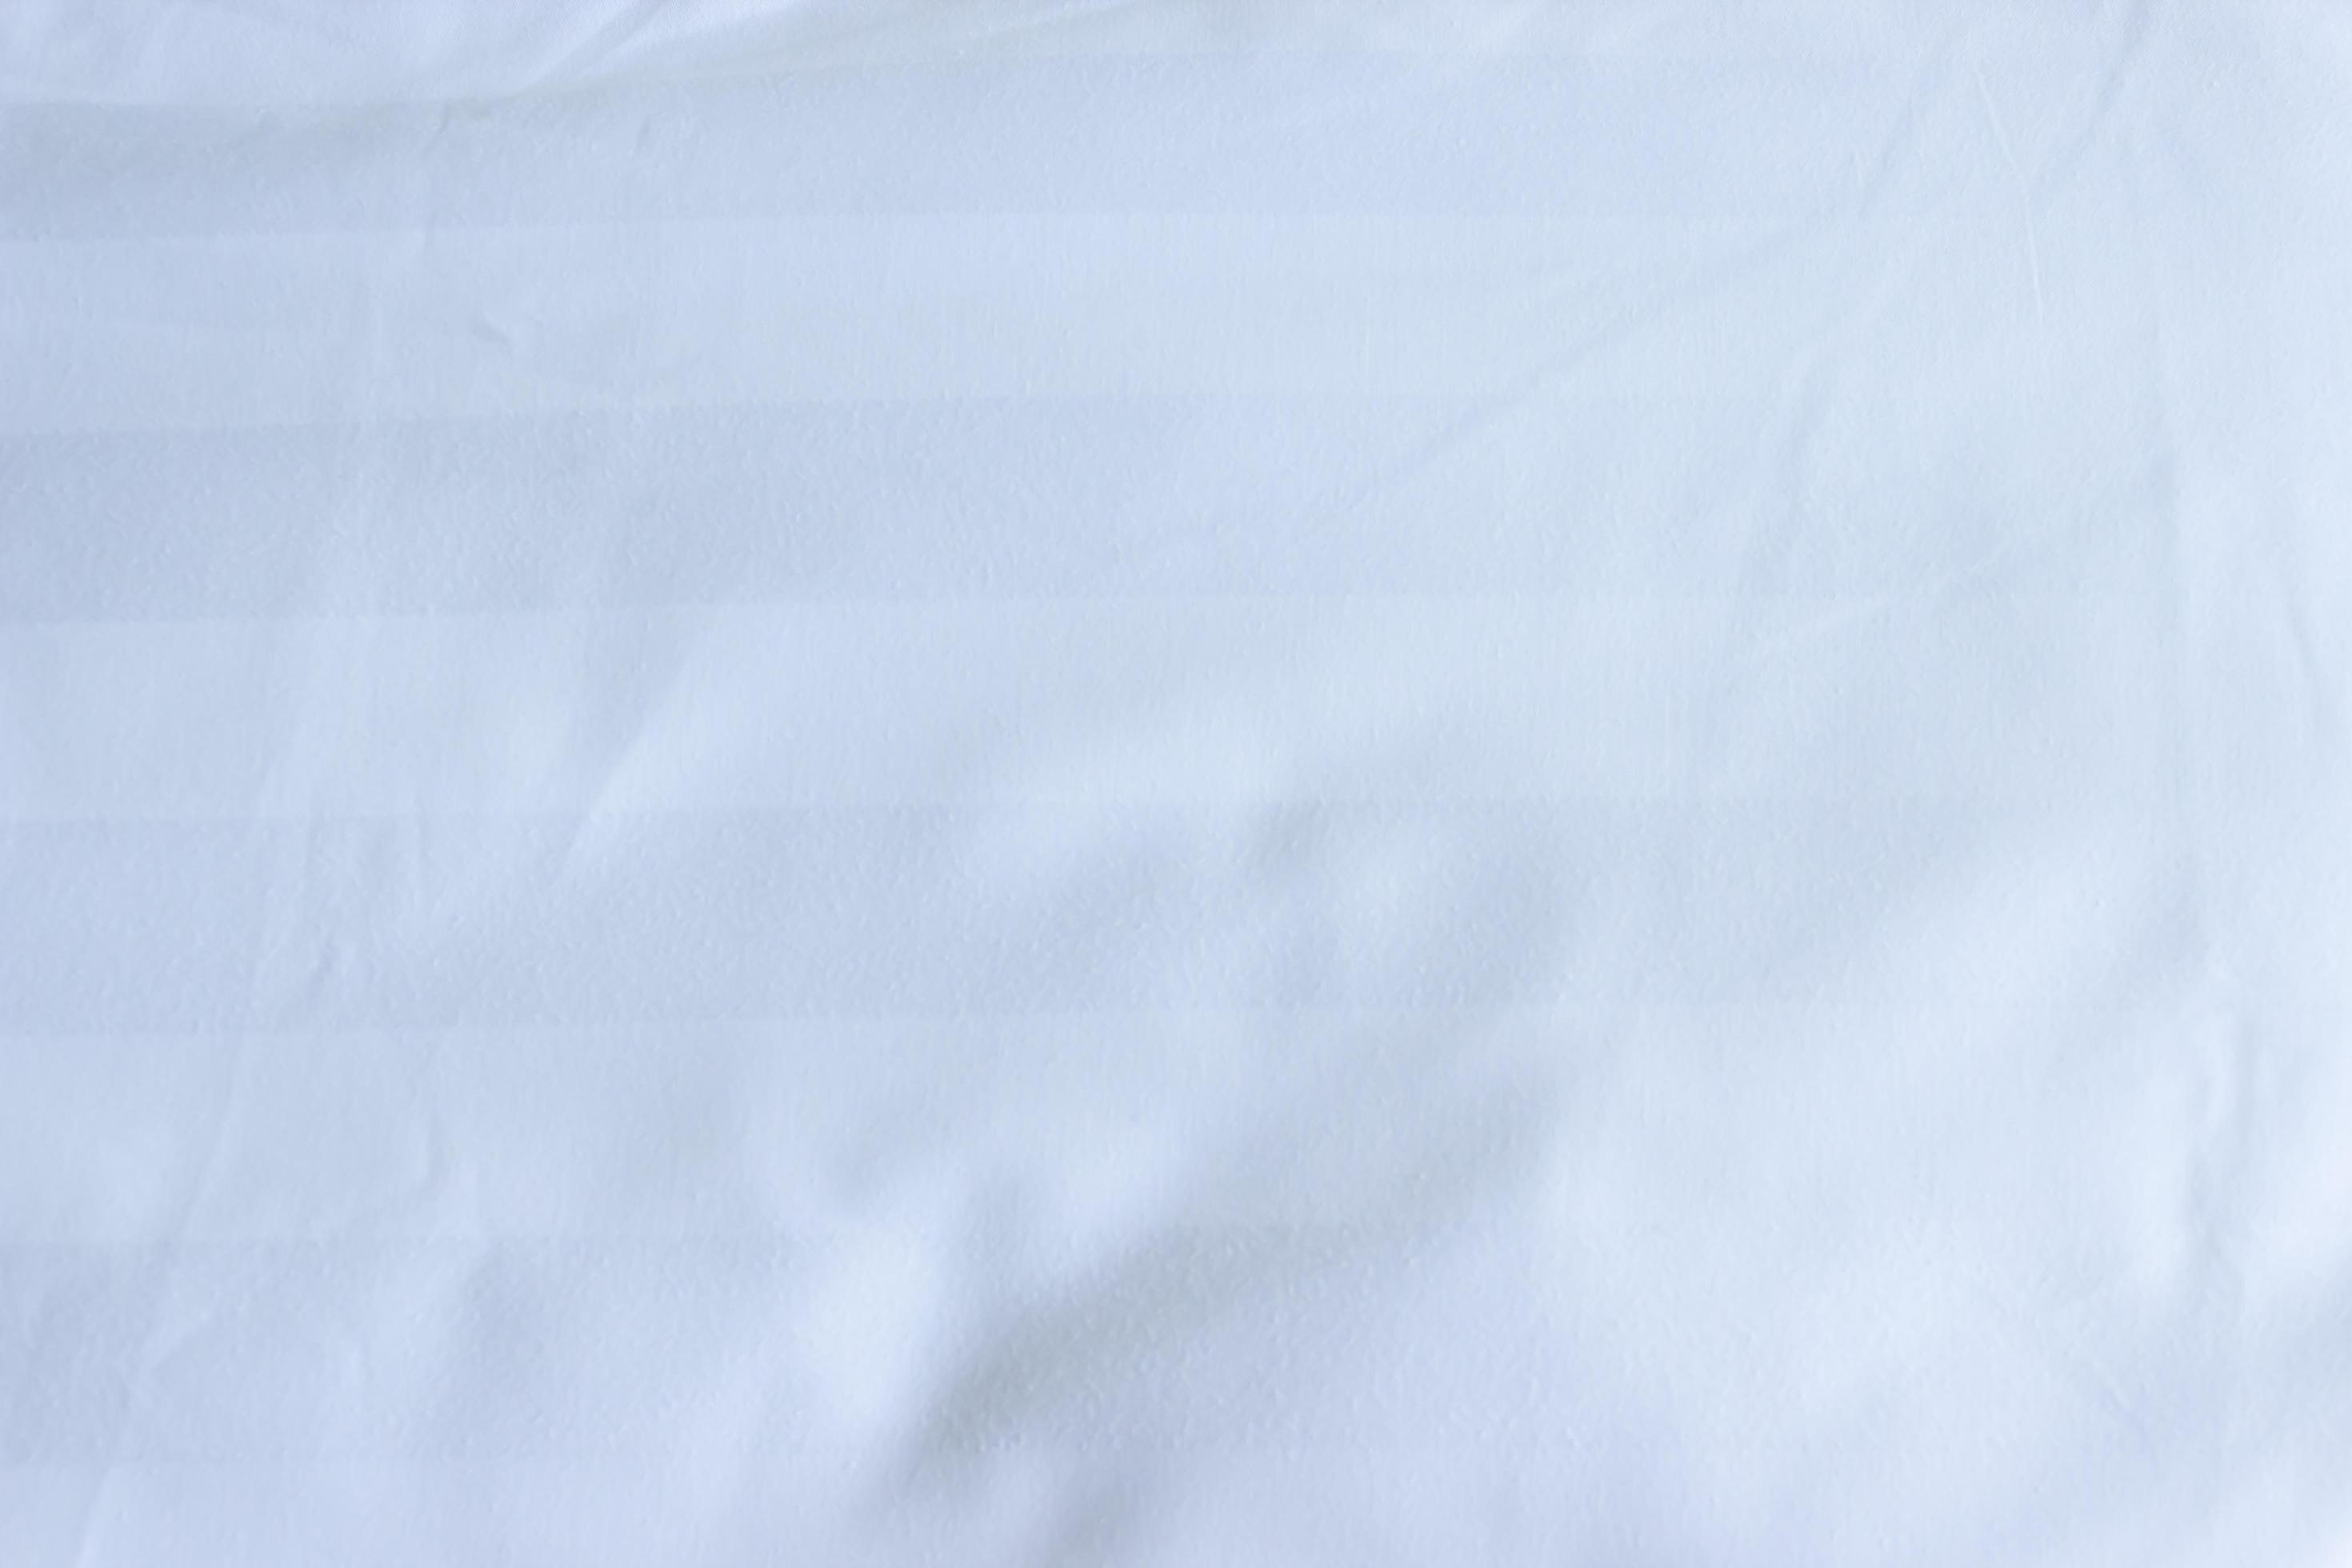 lenzuolo bianco per trama o sfondo 1948173 Stock Photo su Vecteezy